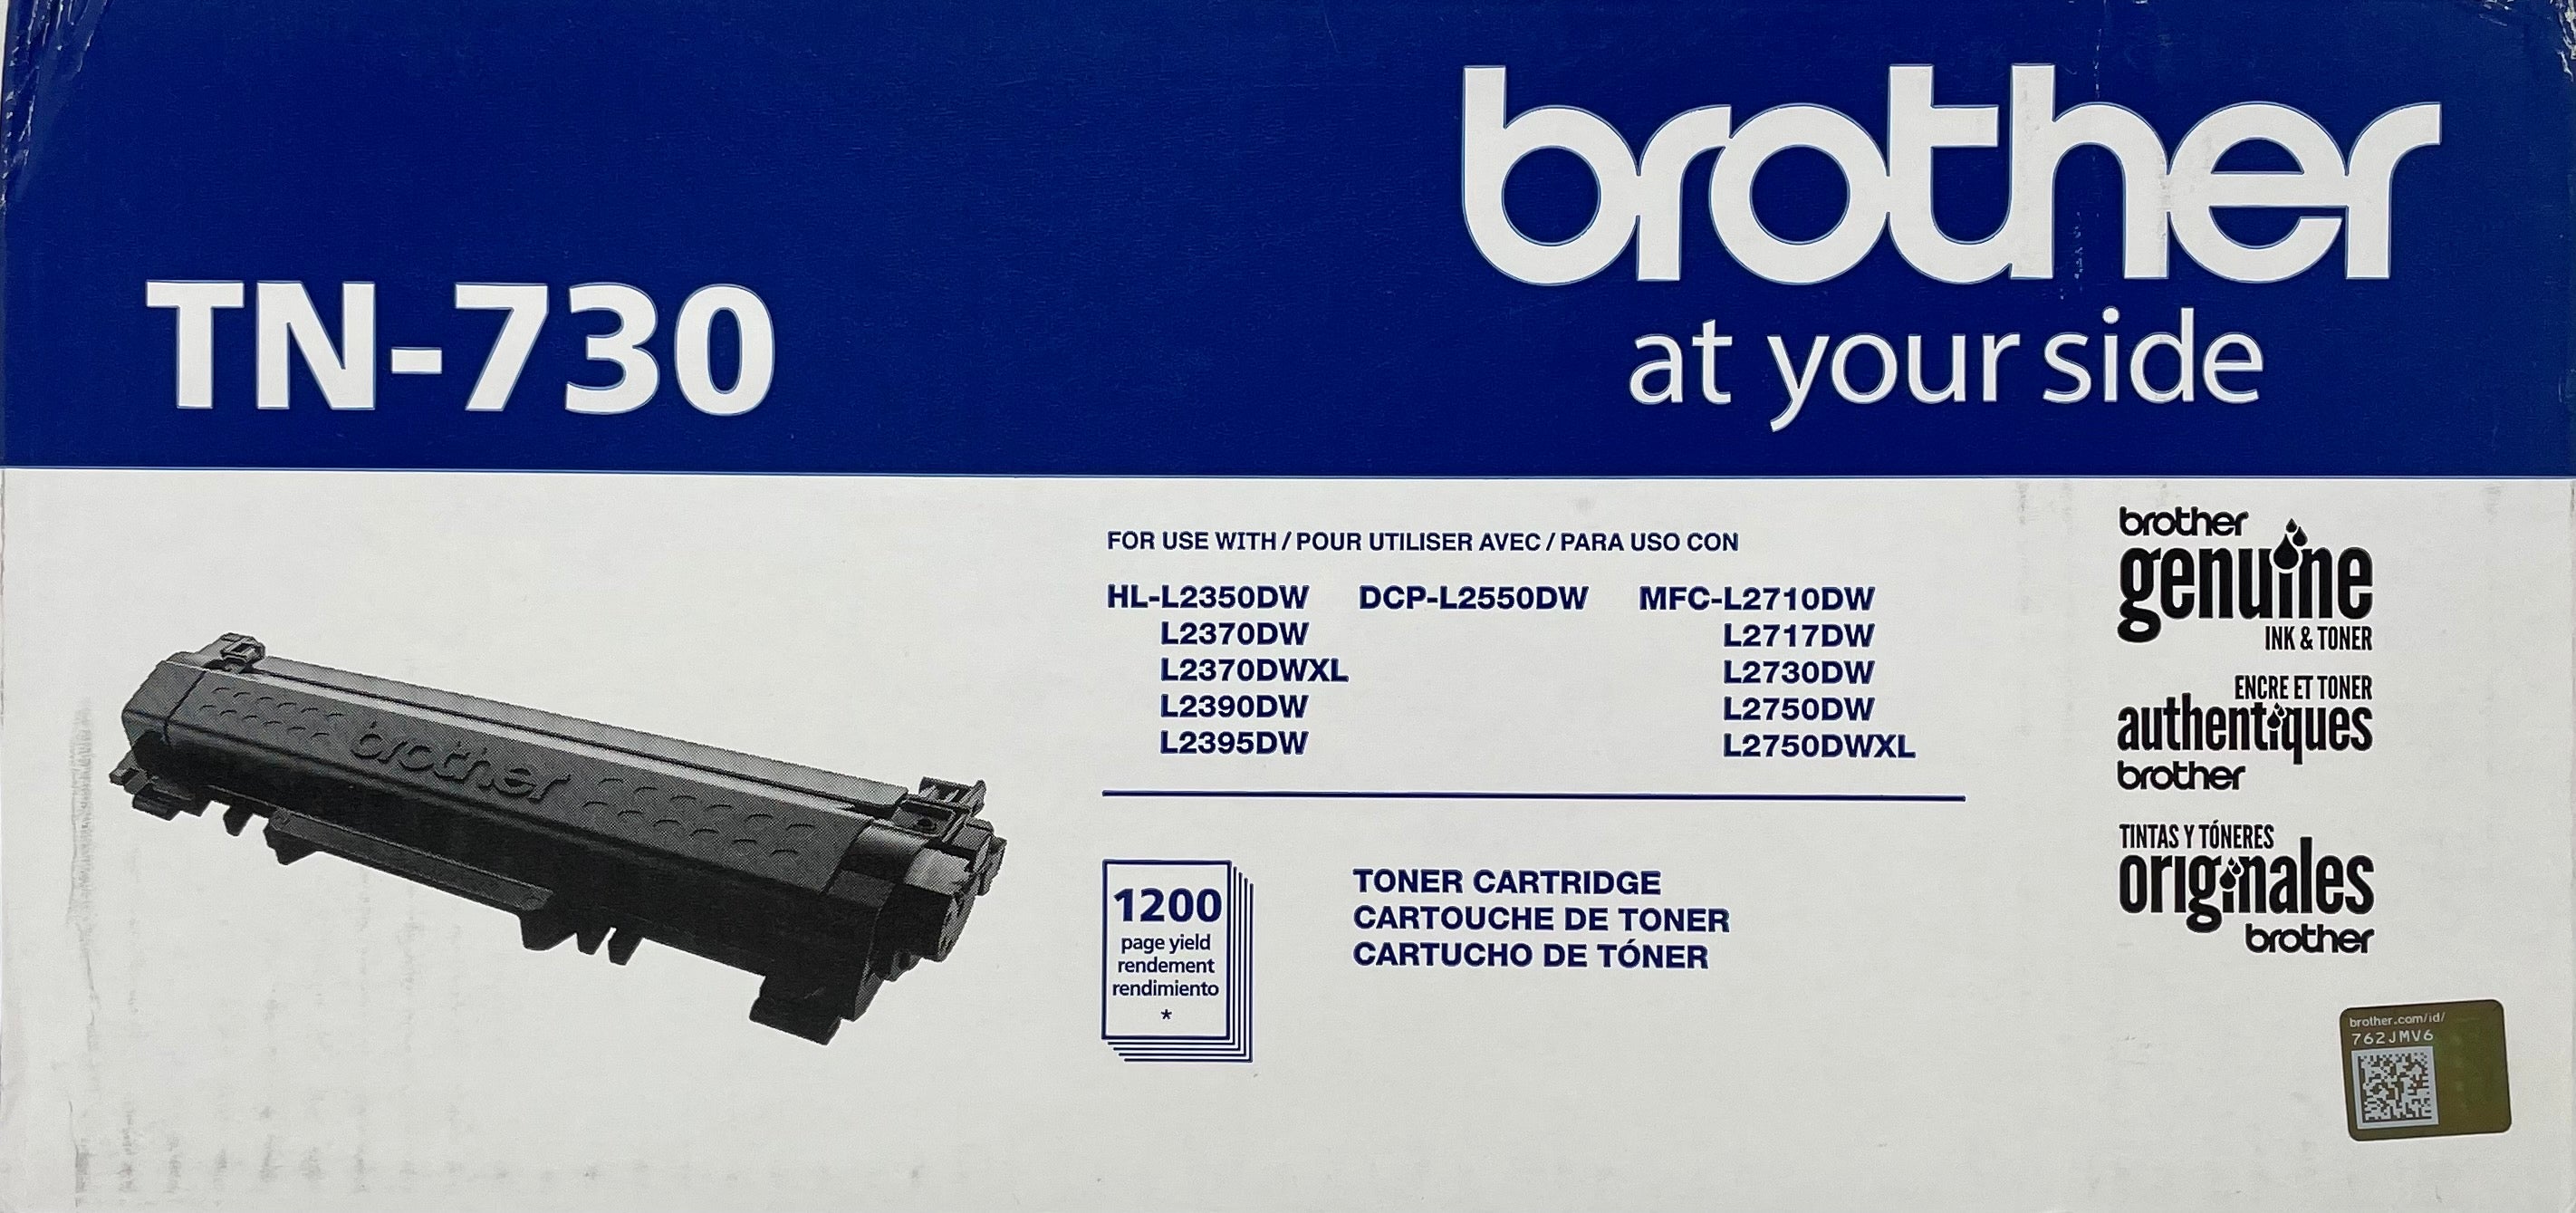 Discount Brother MFC-L2710DW Toner Cartridges